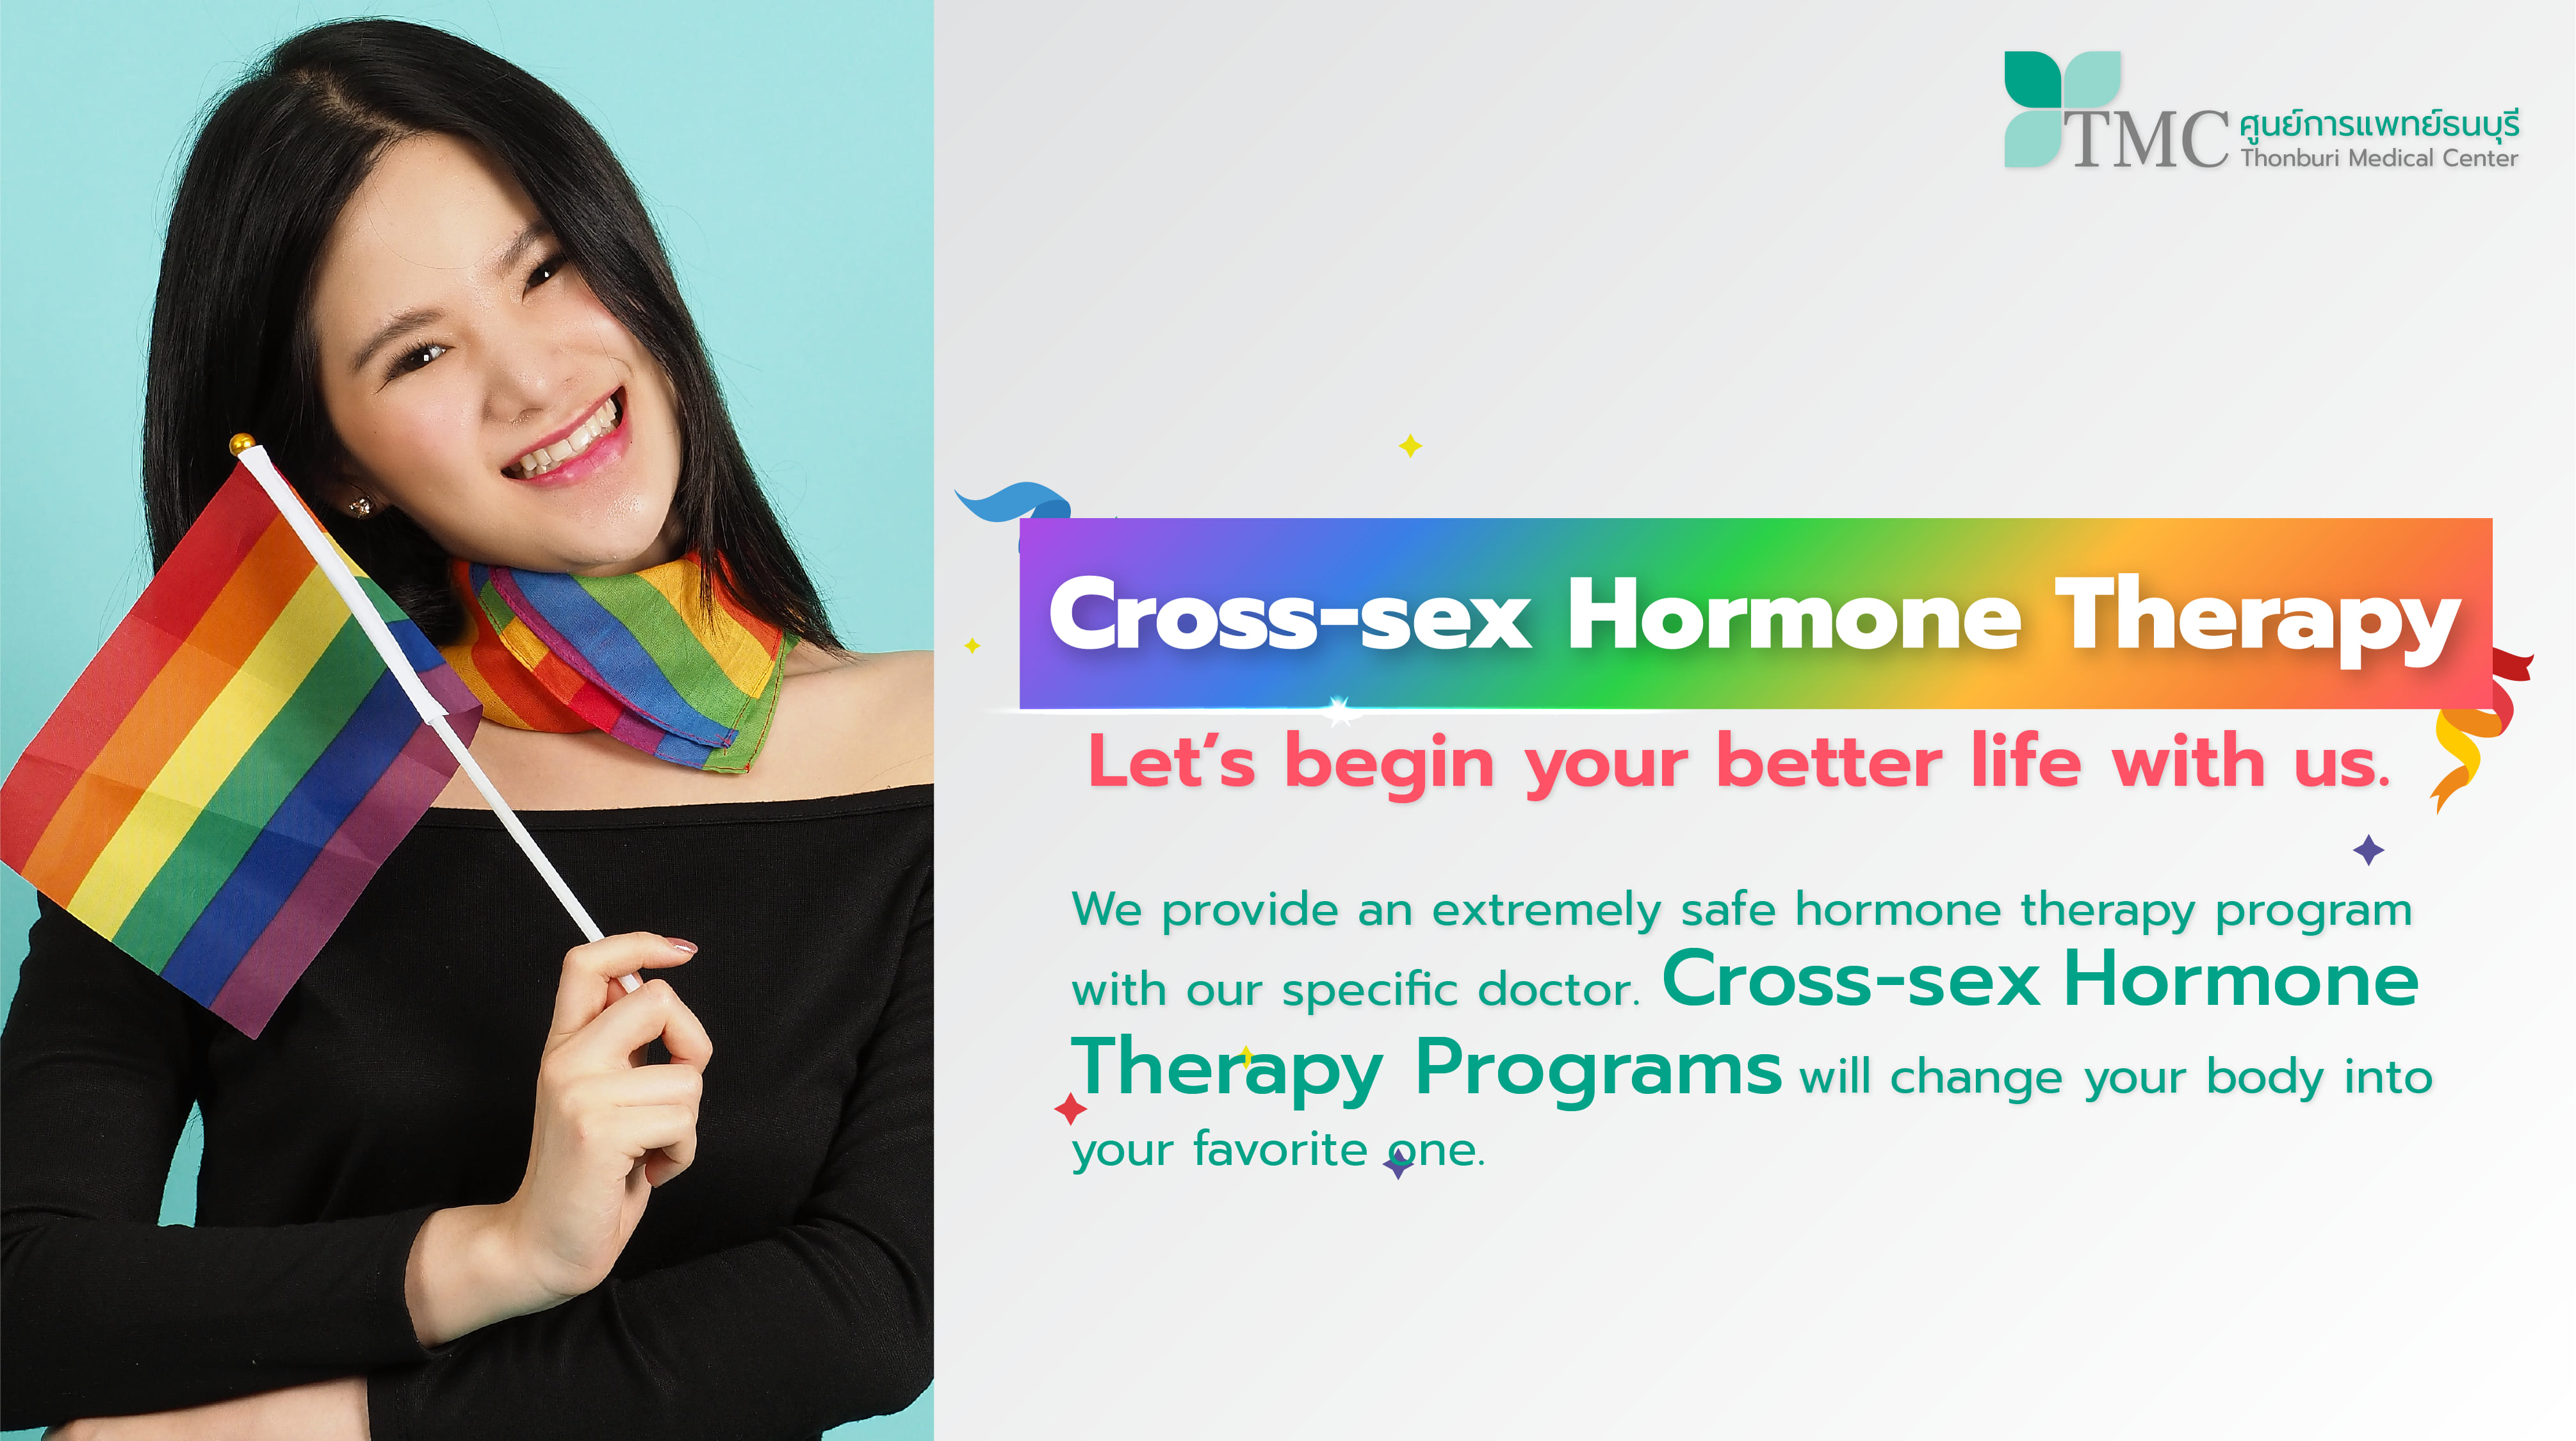 'Cross-sex' Hormone Therapy